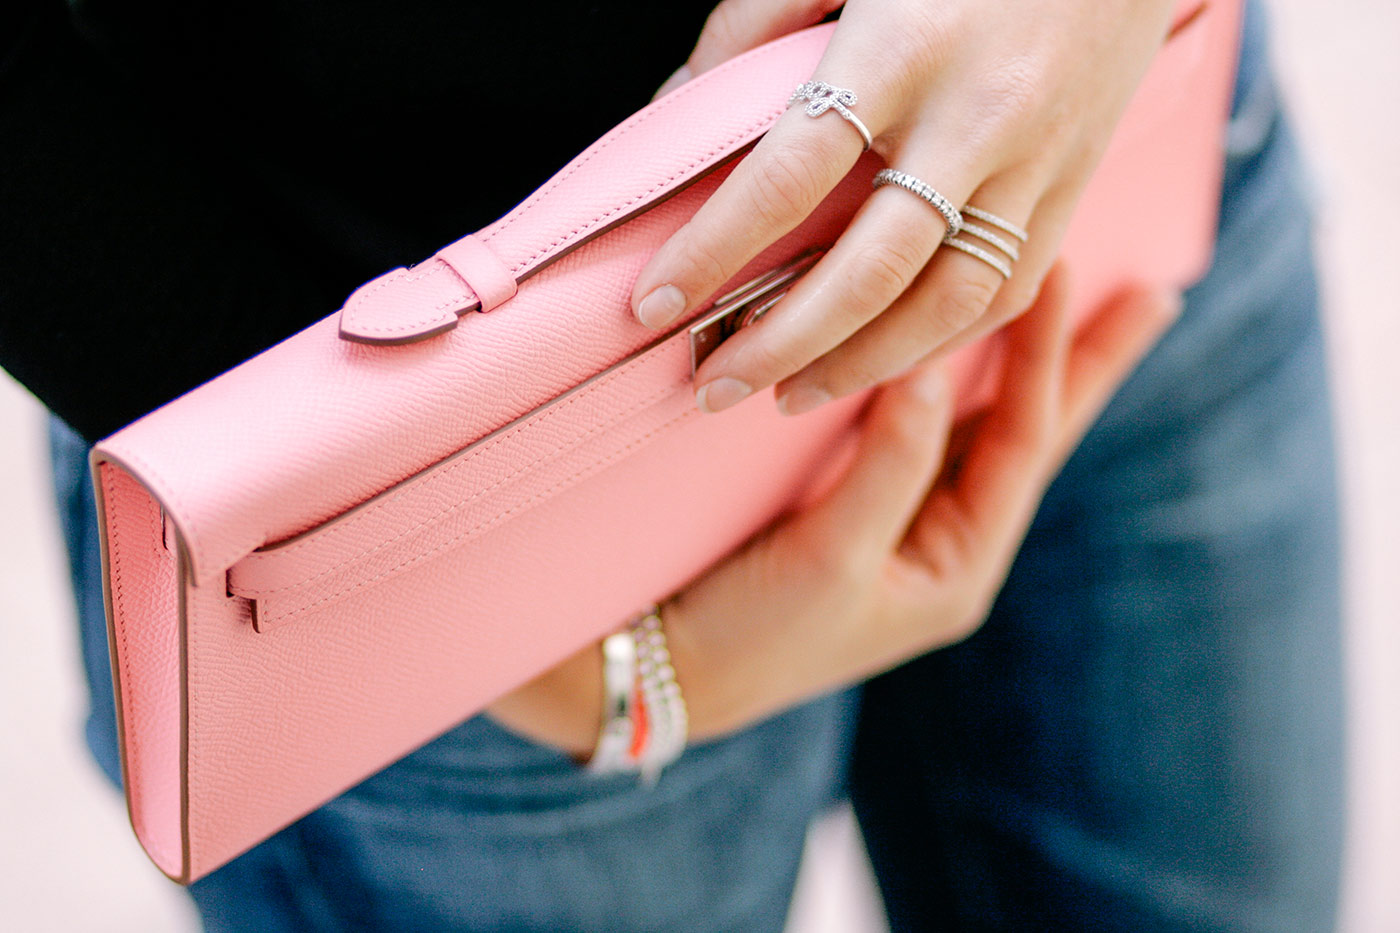 Kelly cut clutch leather clutch bag Hermès Pink in Leather - 18122805